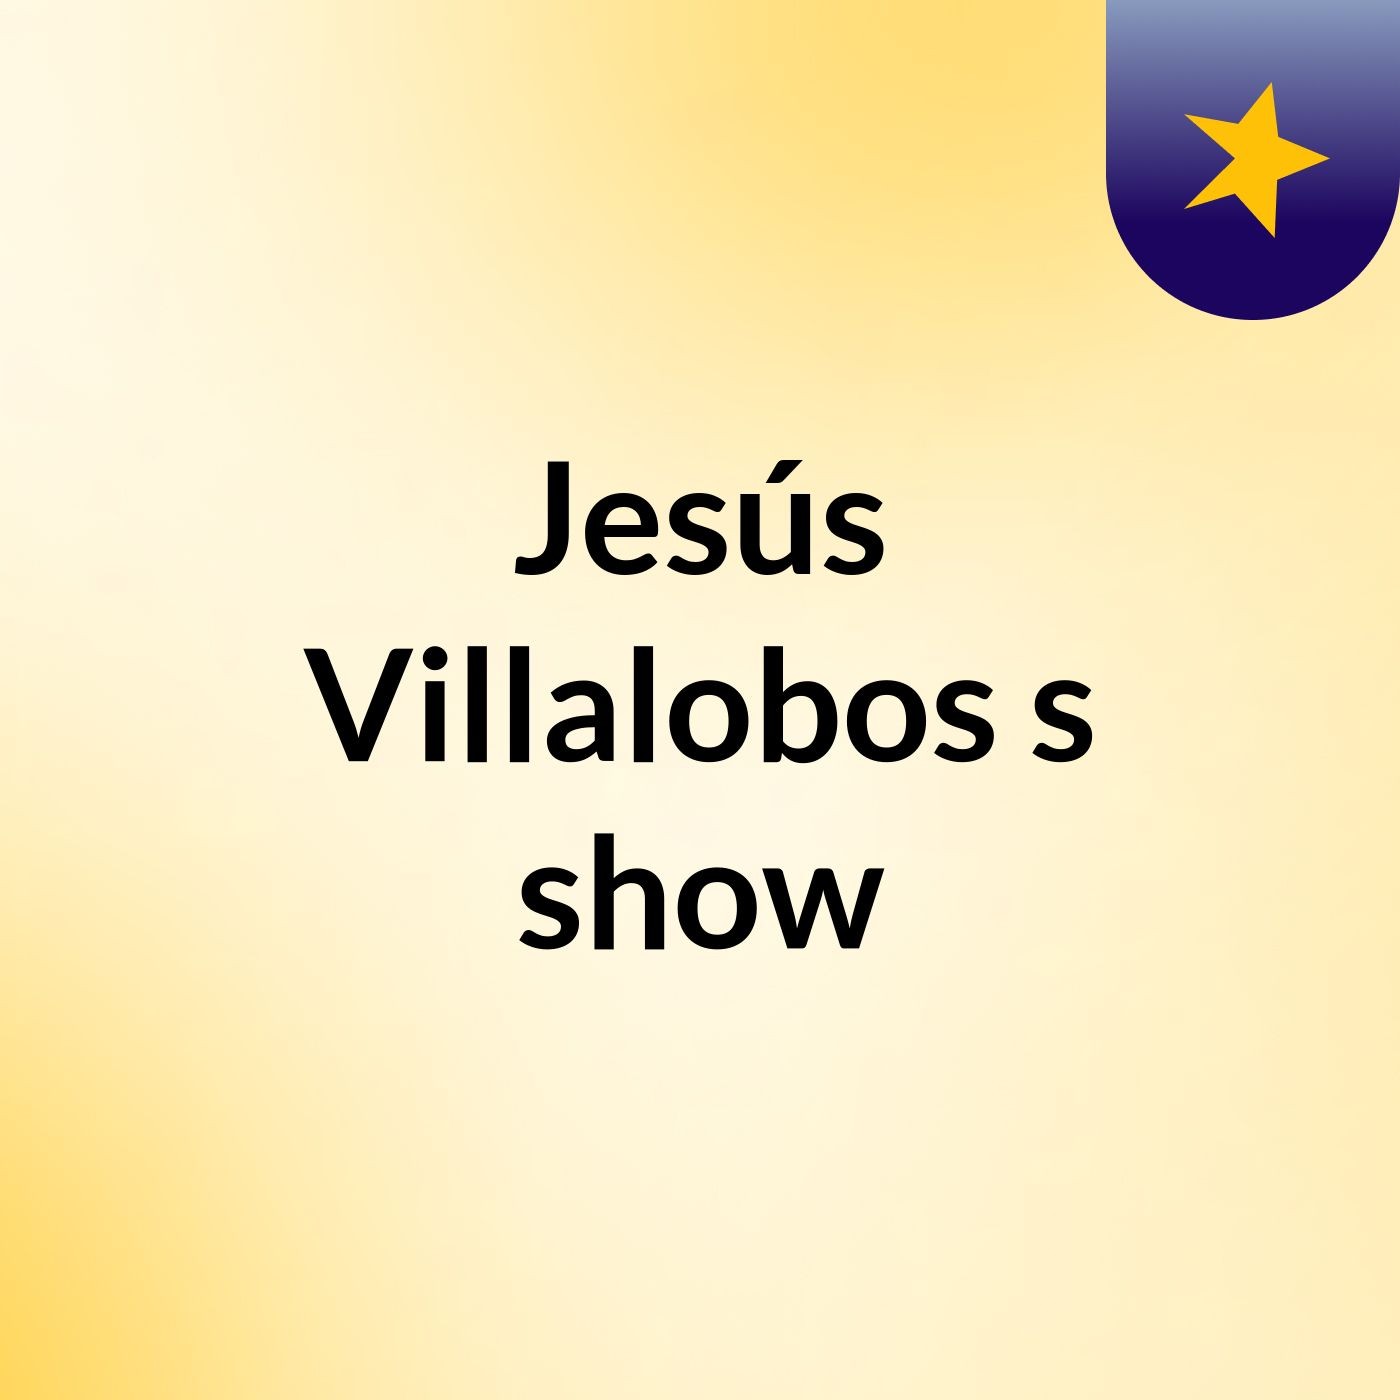 Jesús Villalobos's show